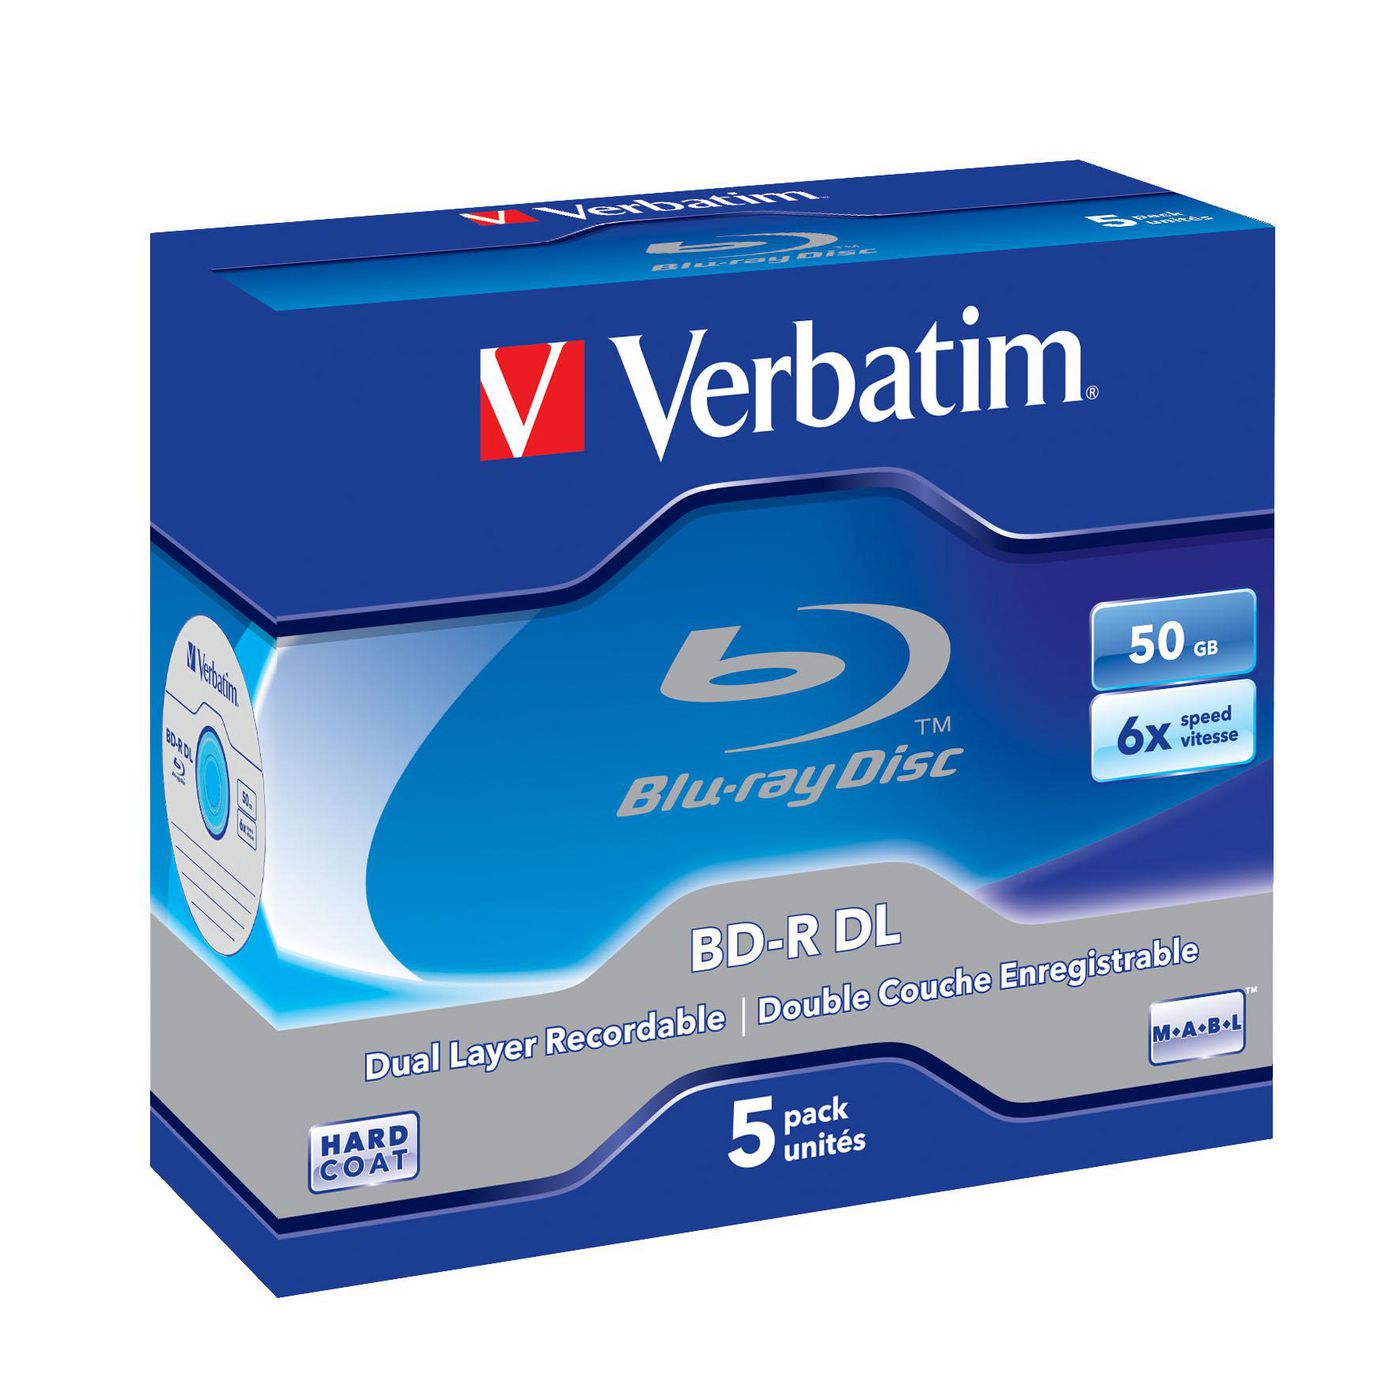 Verbatim 43748 BD-R DL 50GB 6X 5 pack 